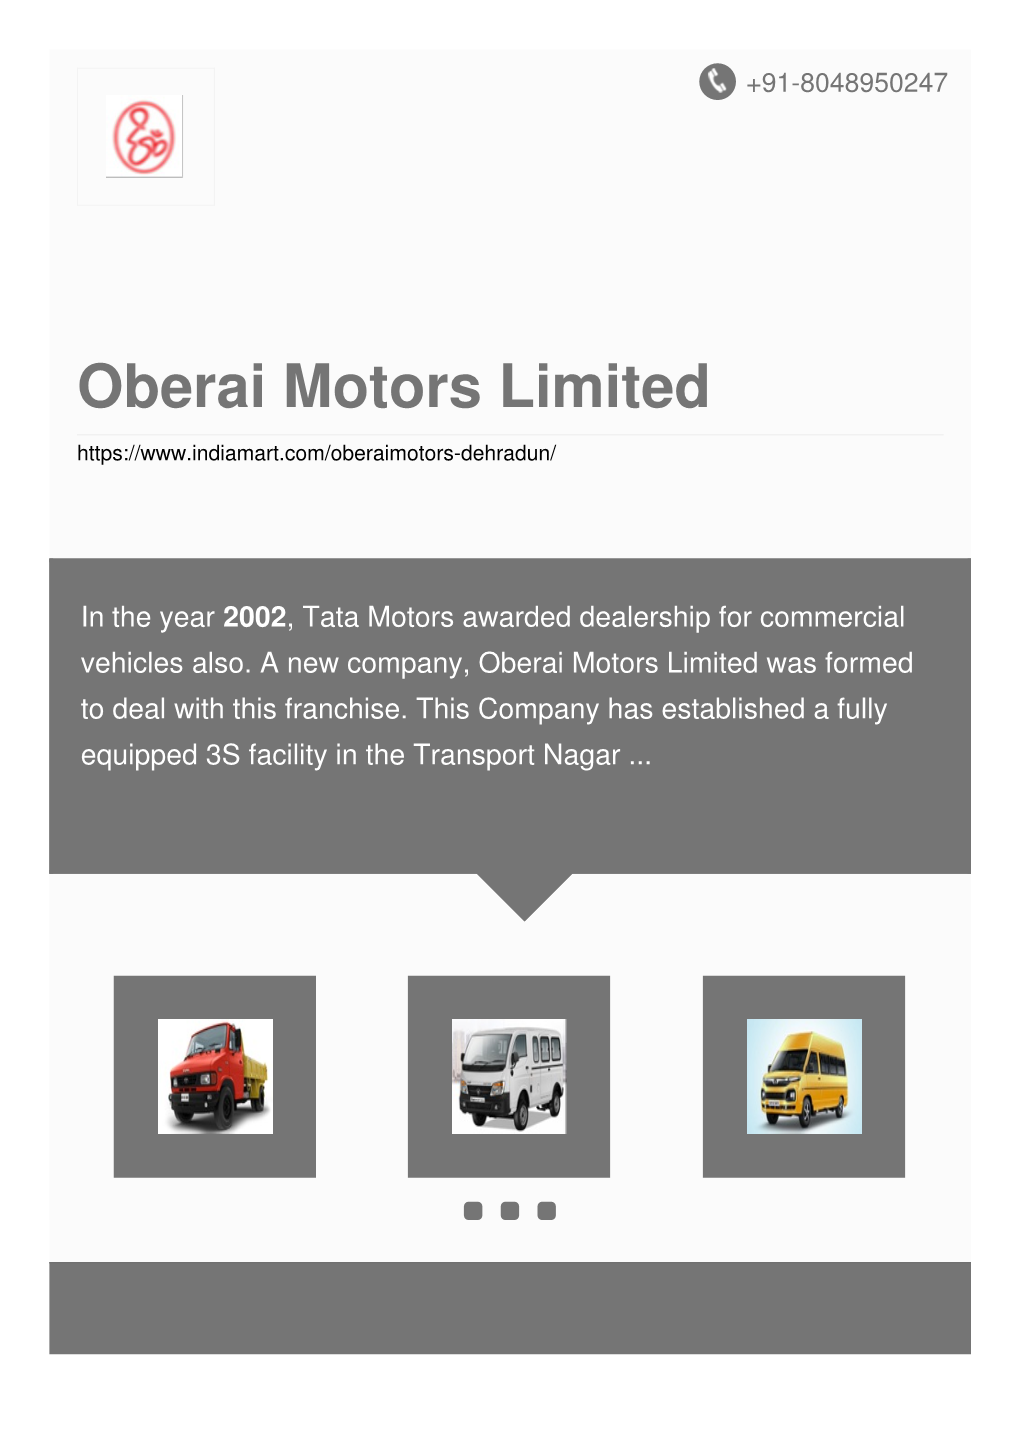 Oberai Motors Limited